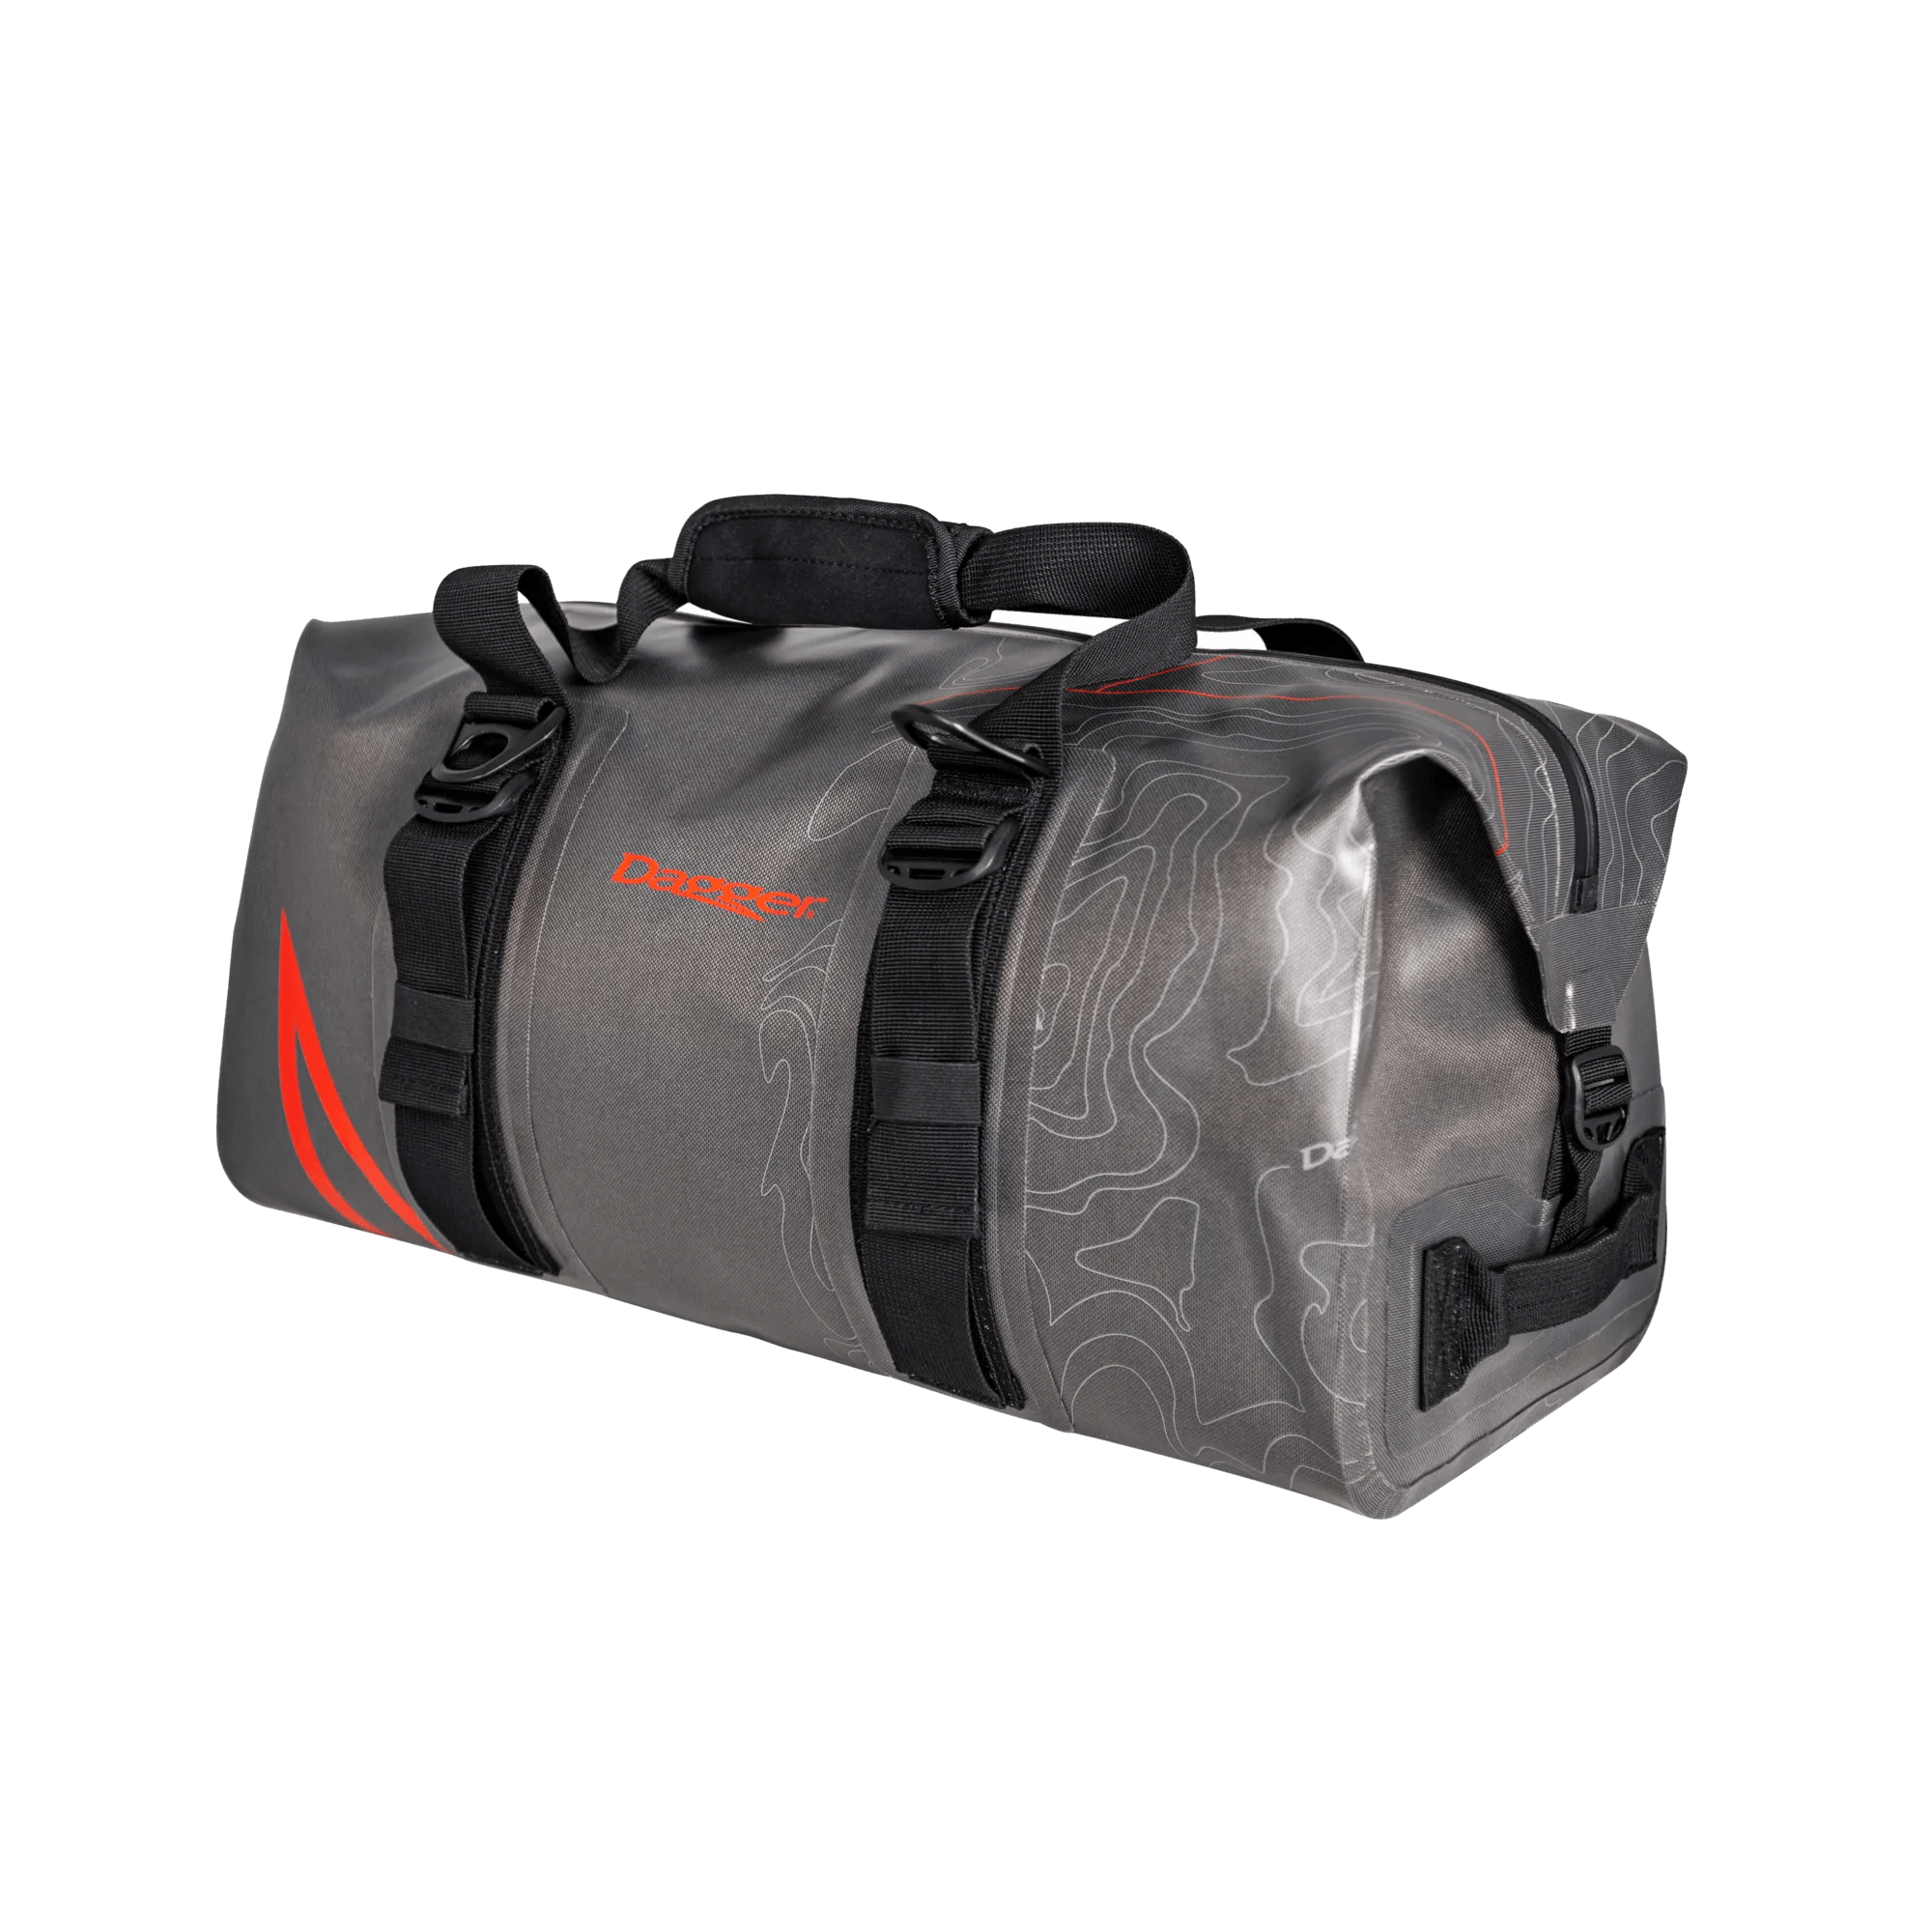 DAGGER - On-Tap Duffel Dry Bag - 30L - Black - 8090004 - TOP 